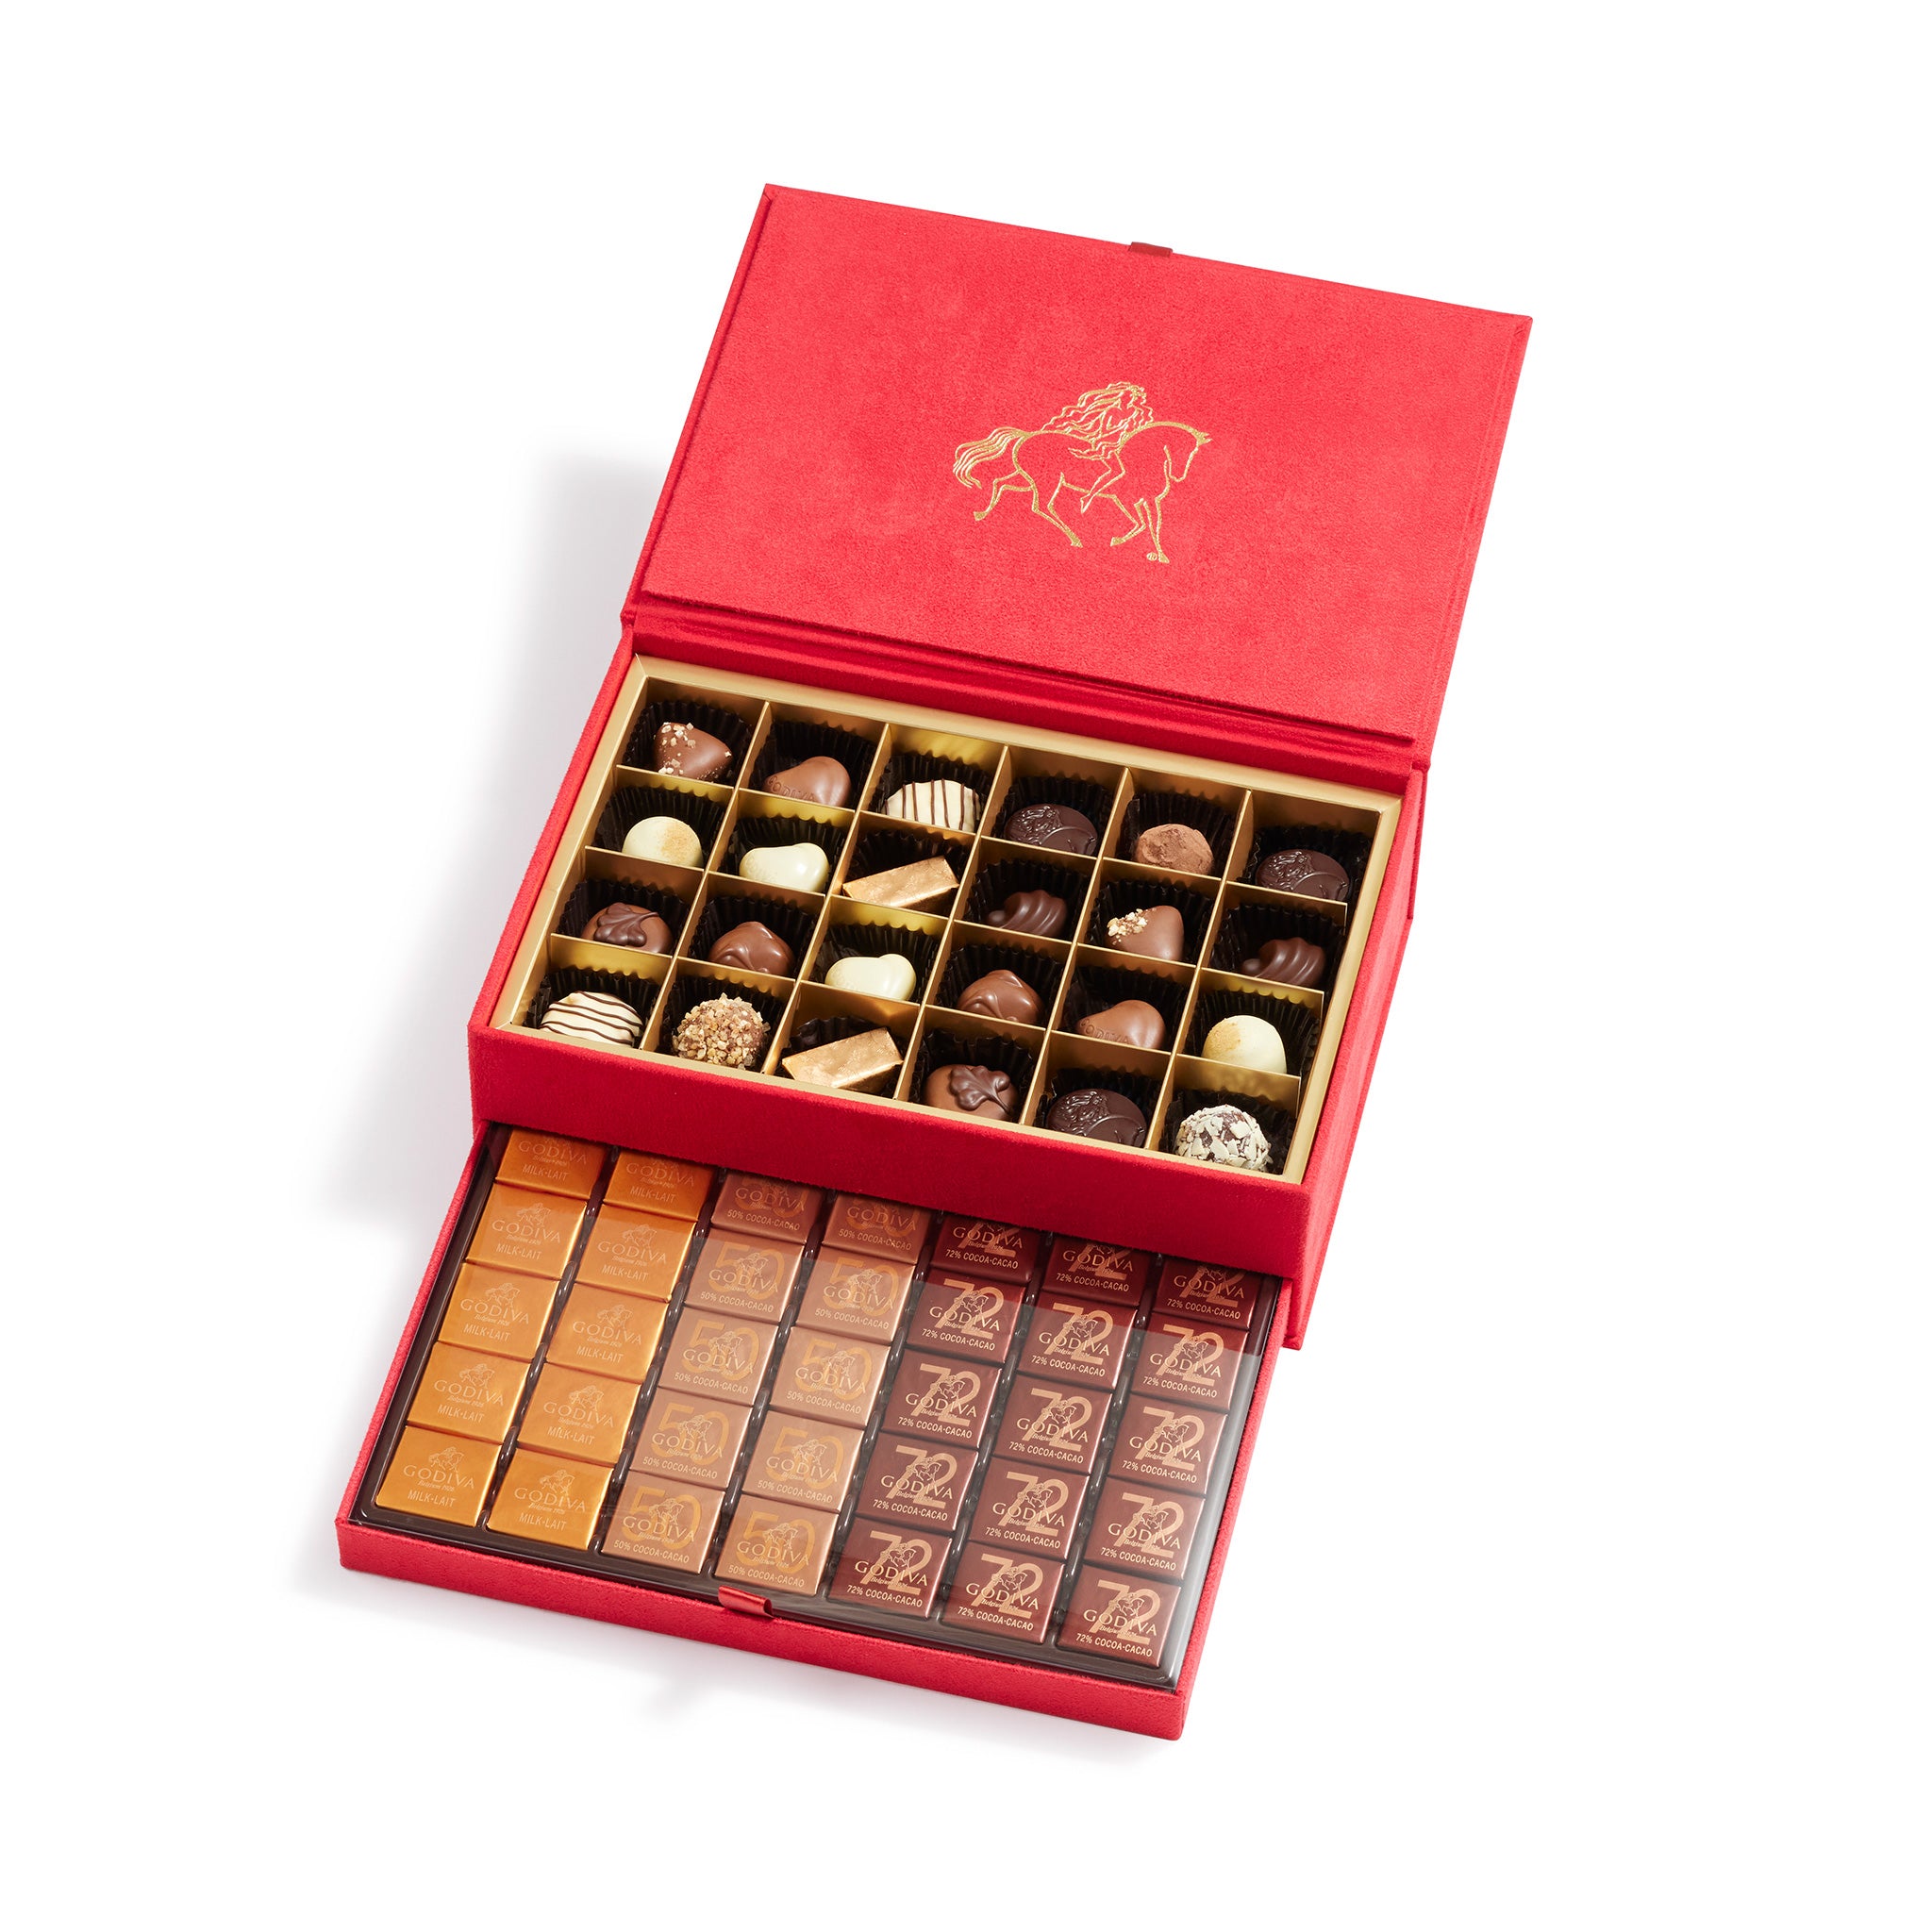 grand-place-chocolate-gift-box-59pc-1.jpg